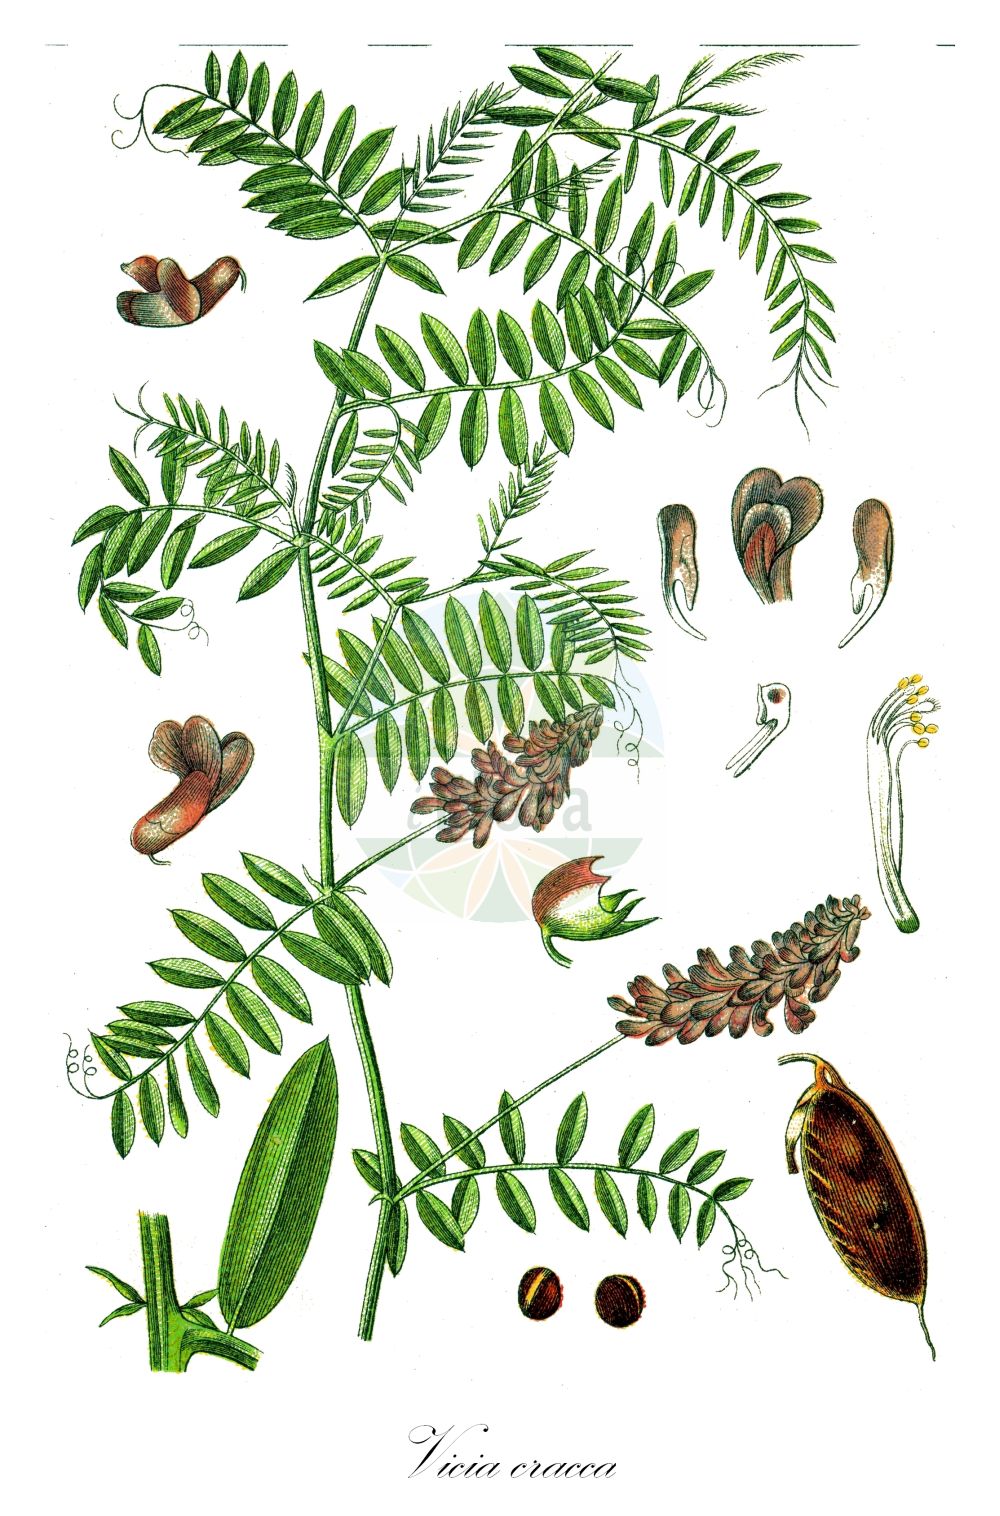 Historische Abbildung von Vicia cracca (Vogel-Wicke - Tufted Vetch). Das Bild zeigt Blatt, Bluete, Frucht und Same. ---- Historical Drawing of Vicia cracca (Vogel-Wicke - Tufted Vetch). The image is showing leaf, flower, fruit and seed.(Vicia cracca,Vogel-Wicke,Tufted Vetch,Cracca major,Vicia cracca,Vicia heteropus,Vicia macrophylla,Vicia oiana,Vicia variabilis,Vogel-Wicke,Tufted Vetch,Bird Vetch,Vicia,Wicke,Vetch,Fabaceae,Schmetterlingsblütler,Pea family,Blatt,Bluete,Frucht,Same,leaf,flower,fruit,seed,Sturm (1796f))